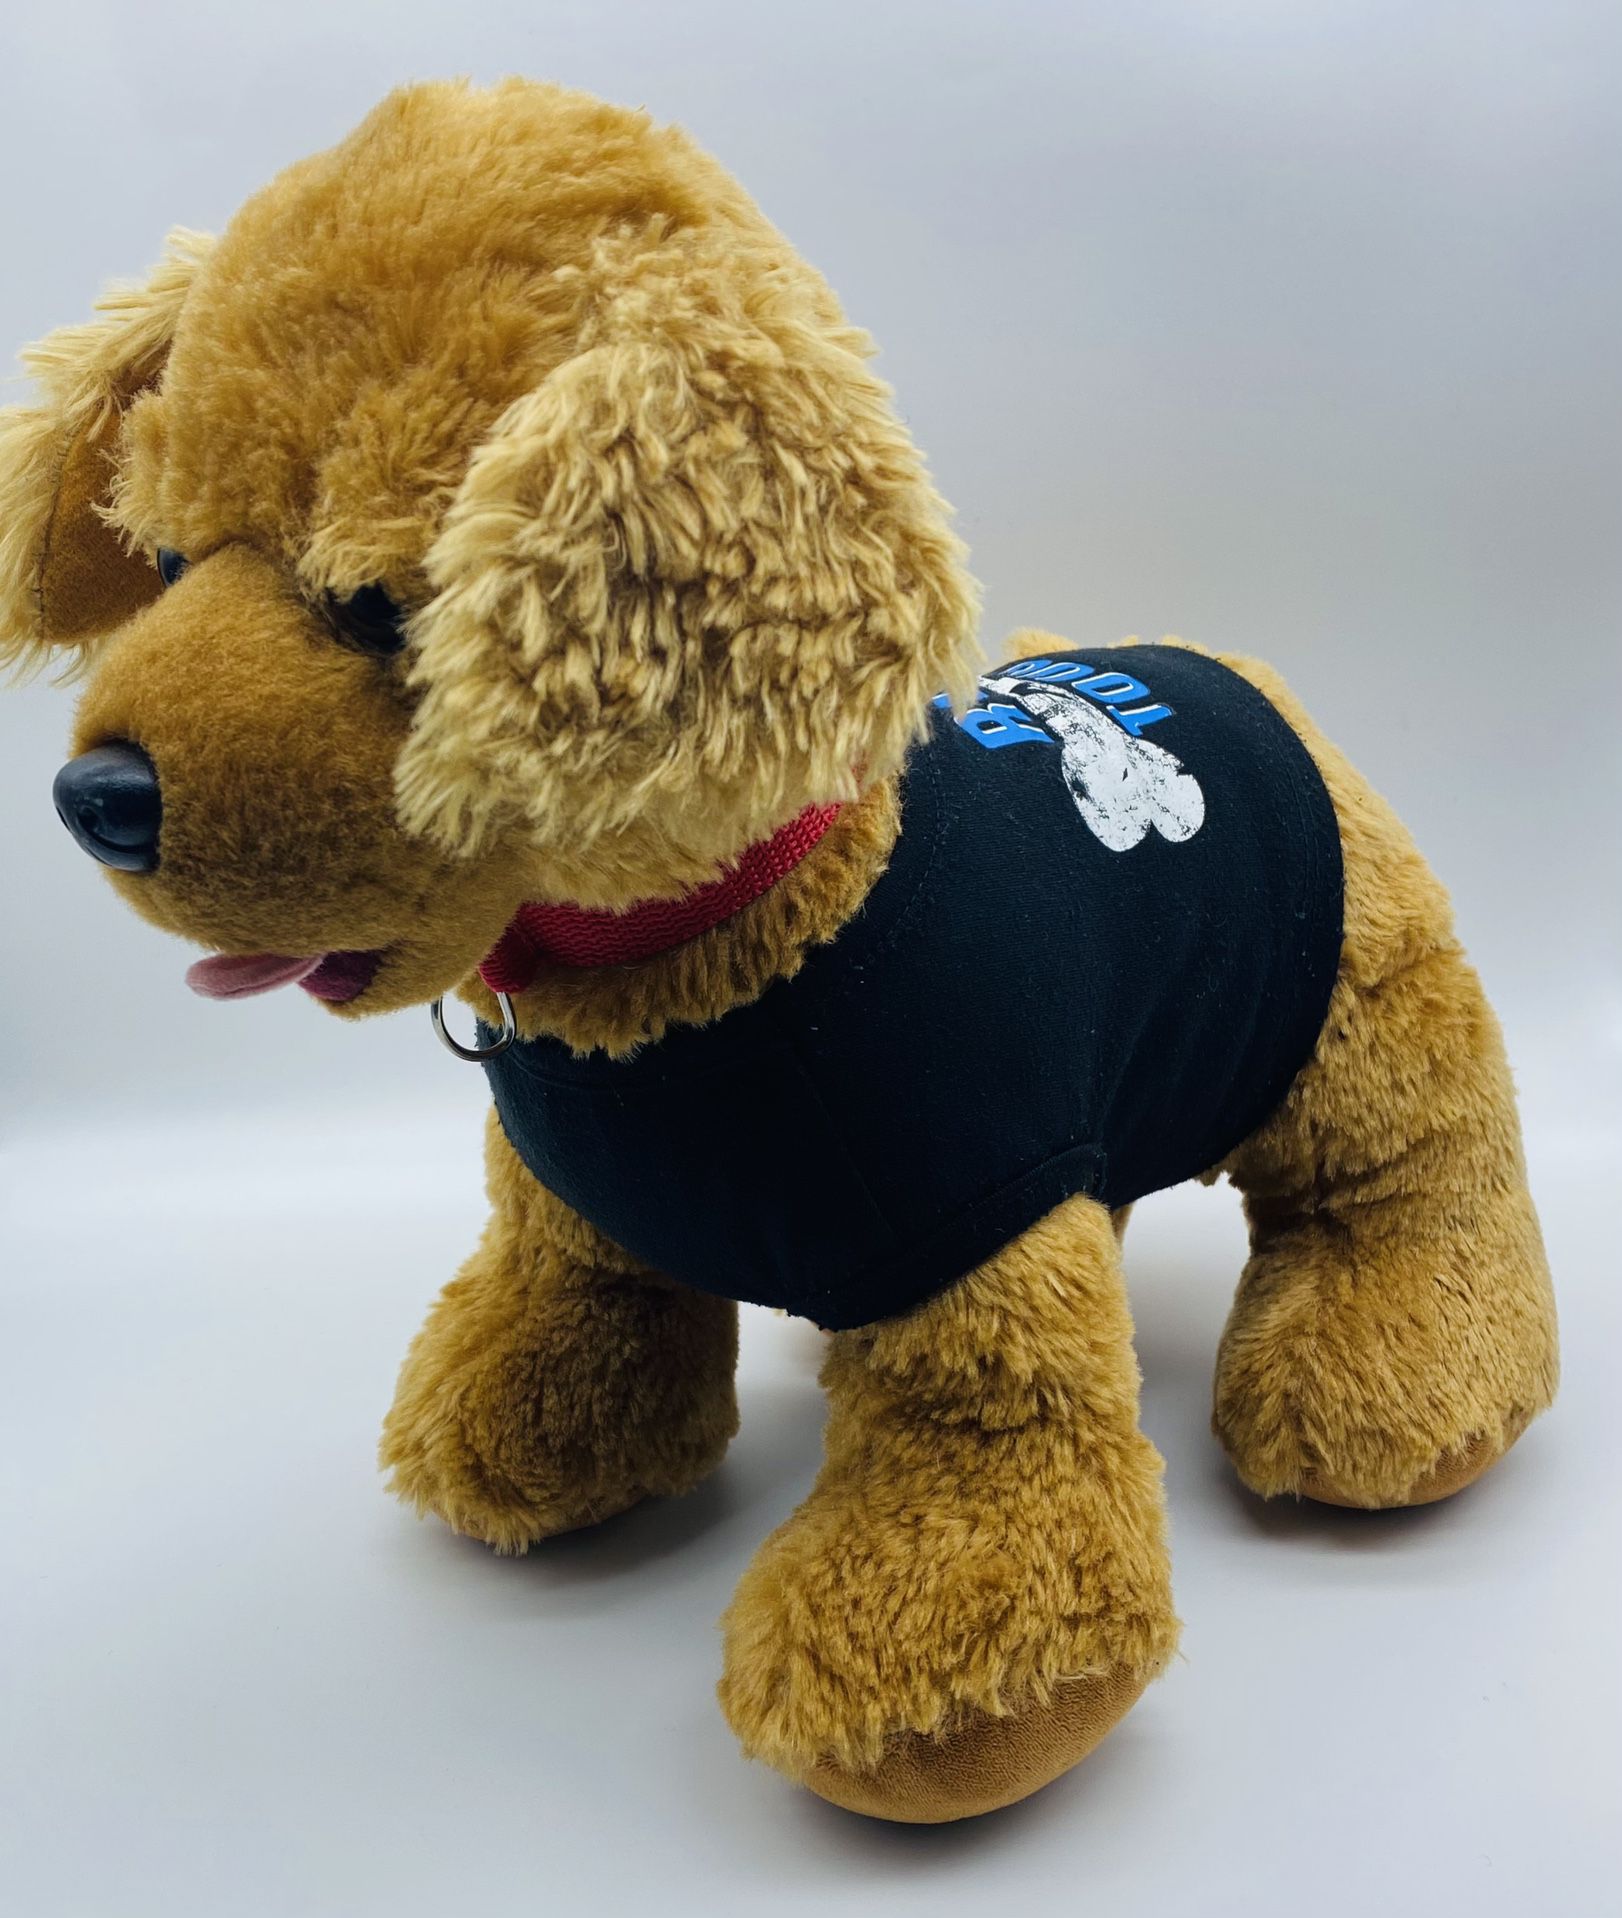 Build-A-Bear 2017 Plush Stuffed Animal Toy Golden Retriever Puppy Dog 15”